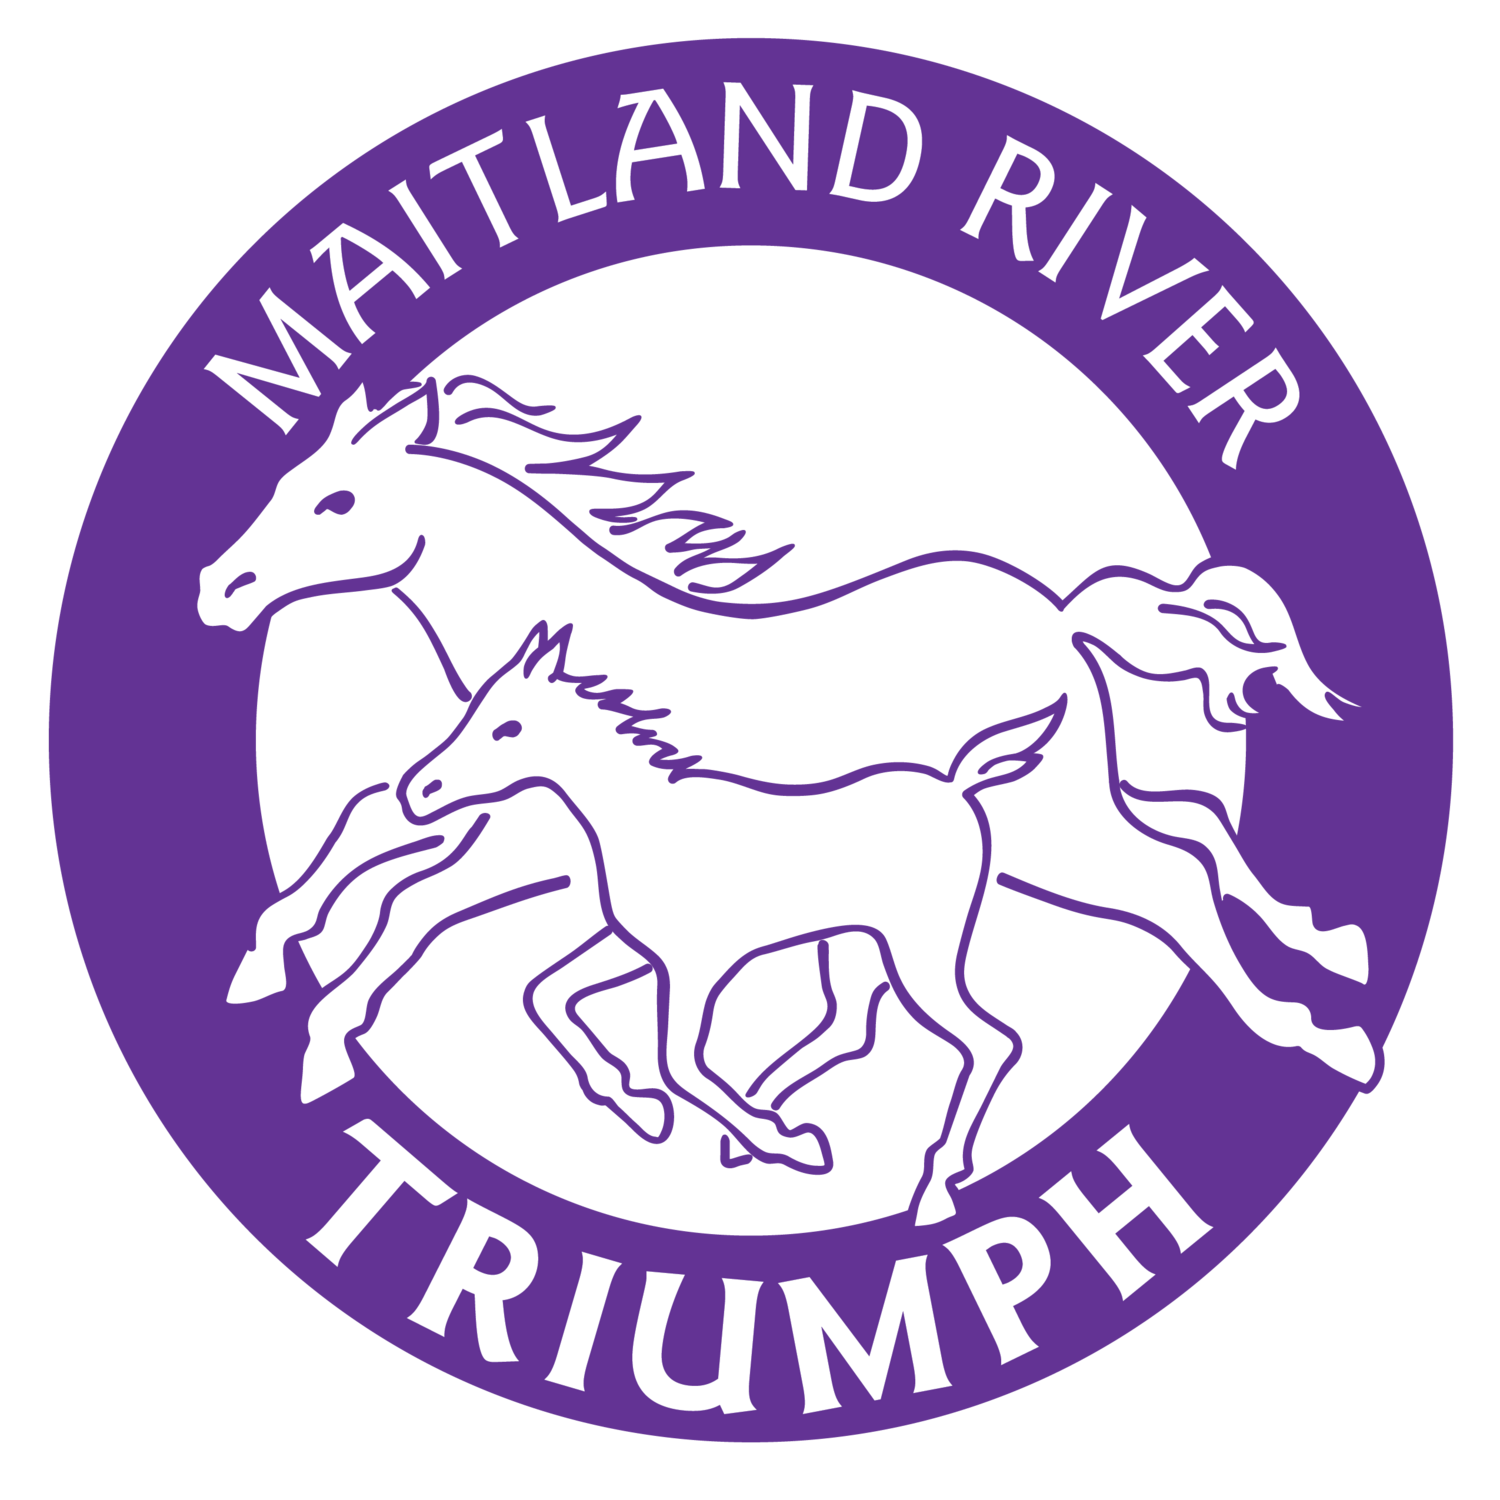 Maitland River ES Donations to Literacy Program